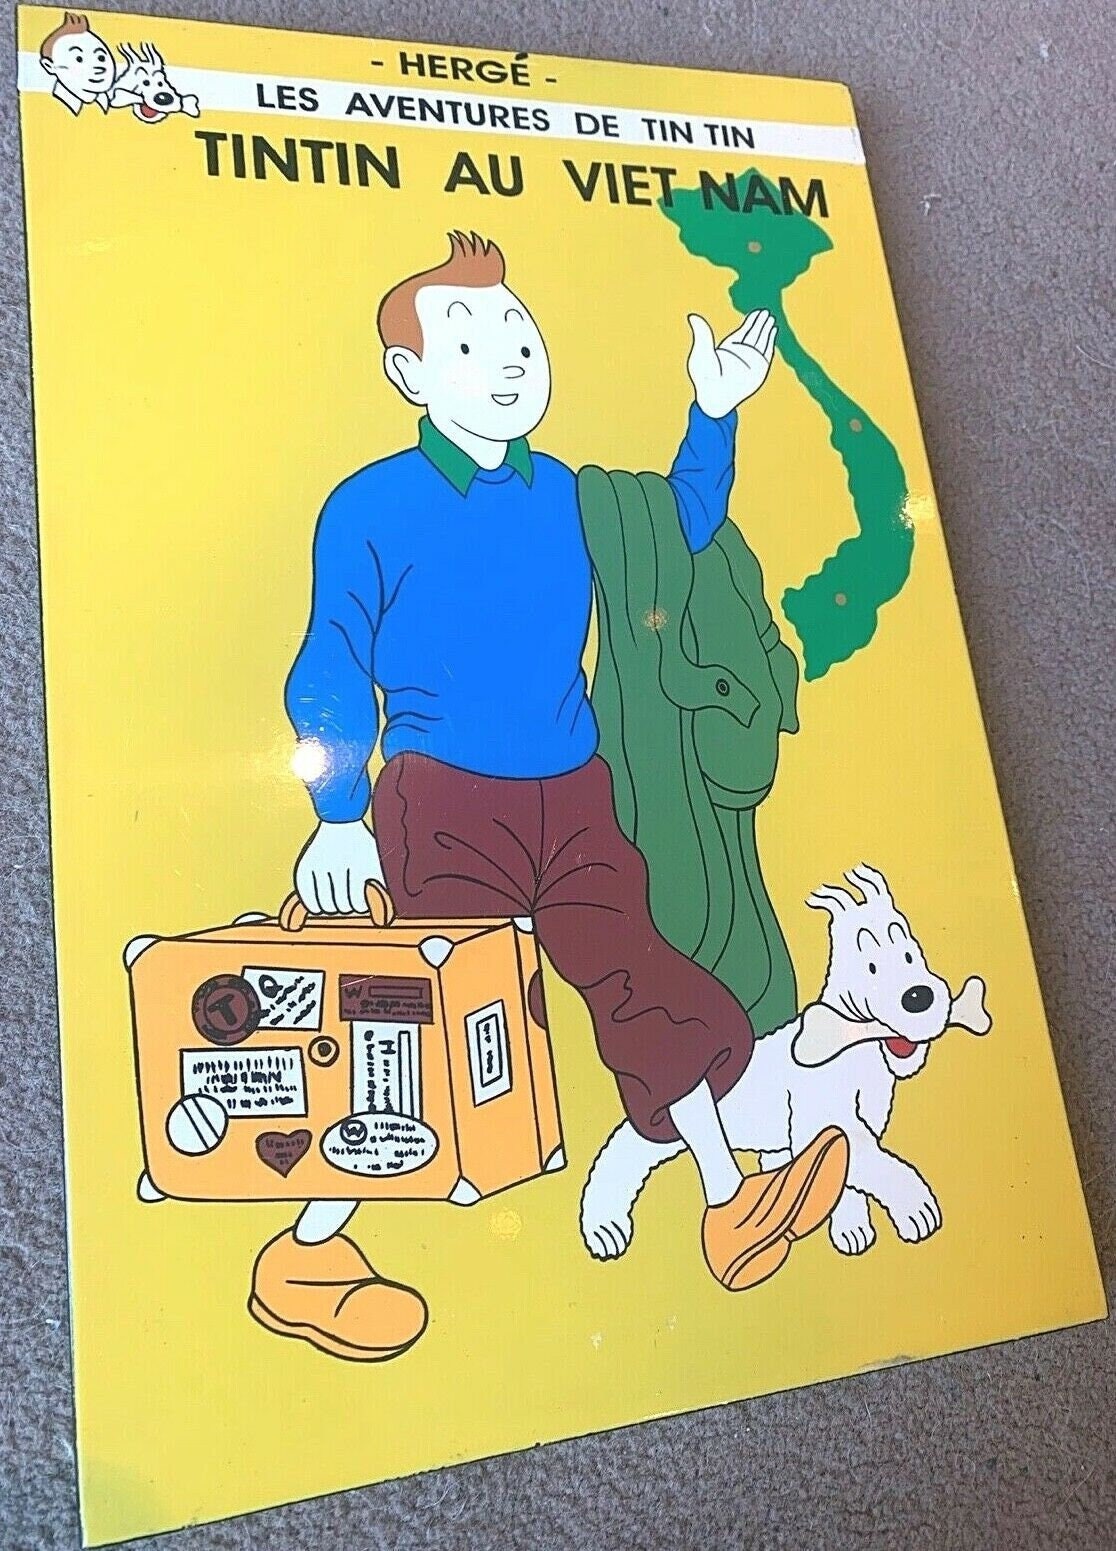 Ltd Laquer Frame Print/Plaque 30x20 cm Poster Herge Parody Tintin in Vietnam V1